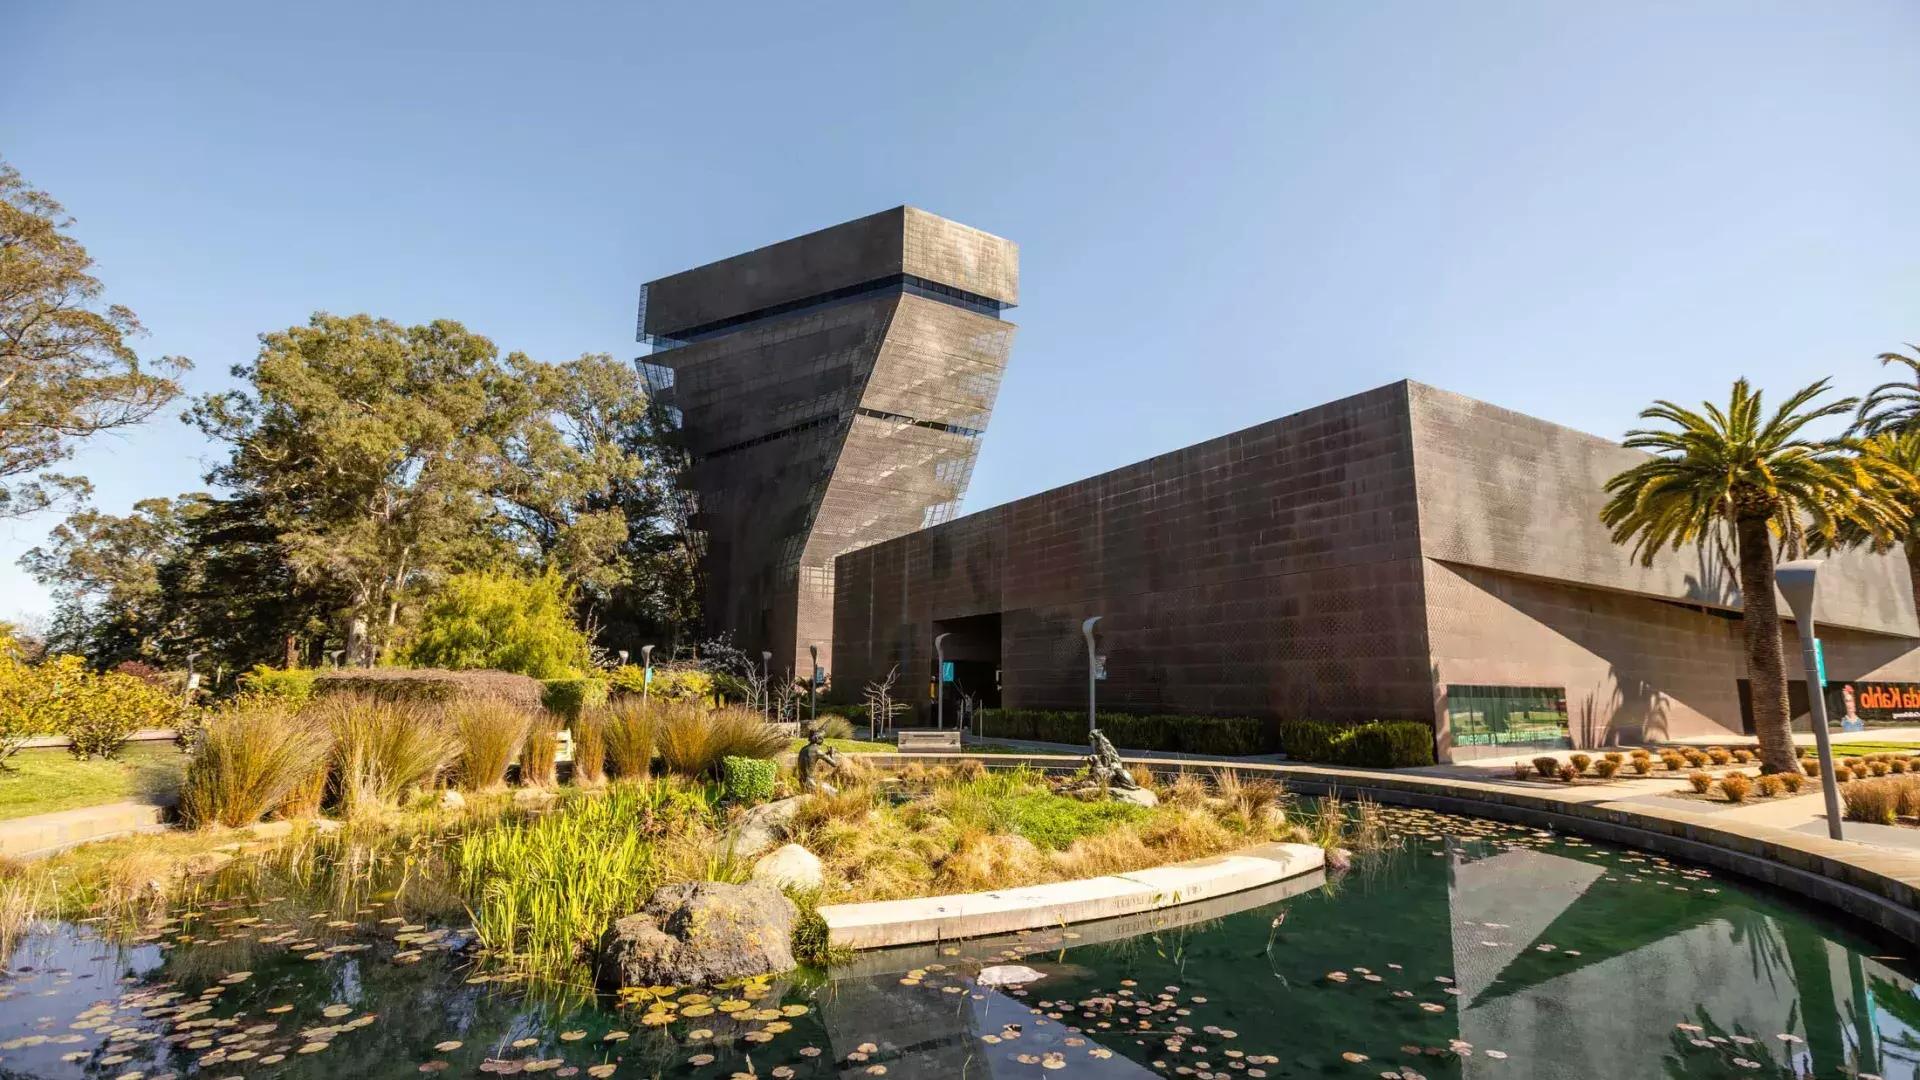 Exterior of 的 modern, angular 德扬博物馆. San Francisco, California.